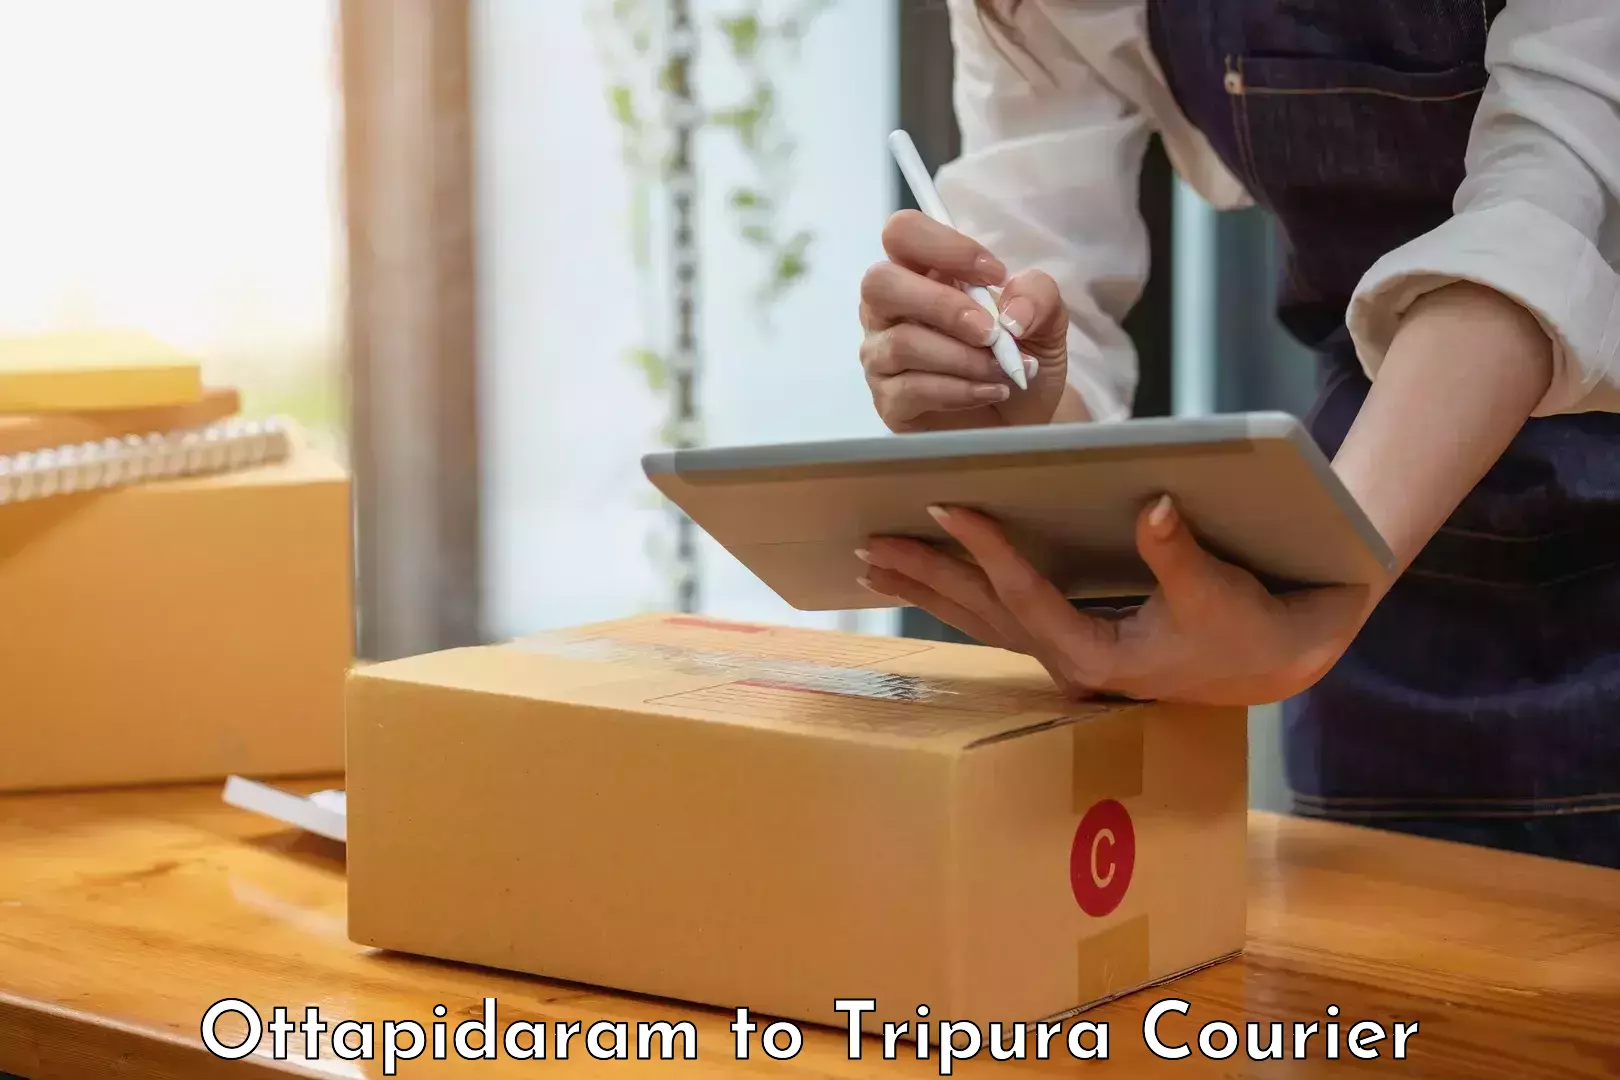 International parcel service Ottapidaram to Tripura